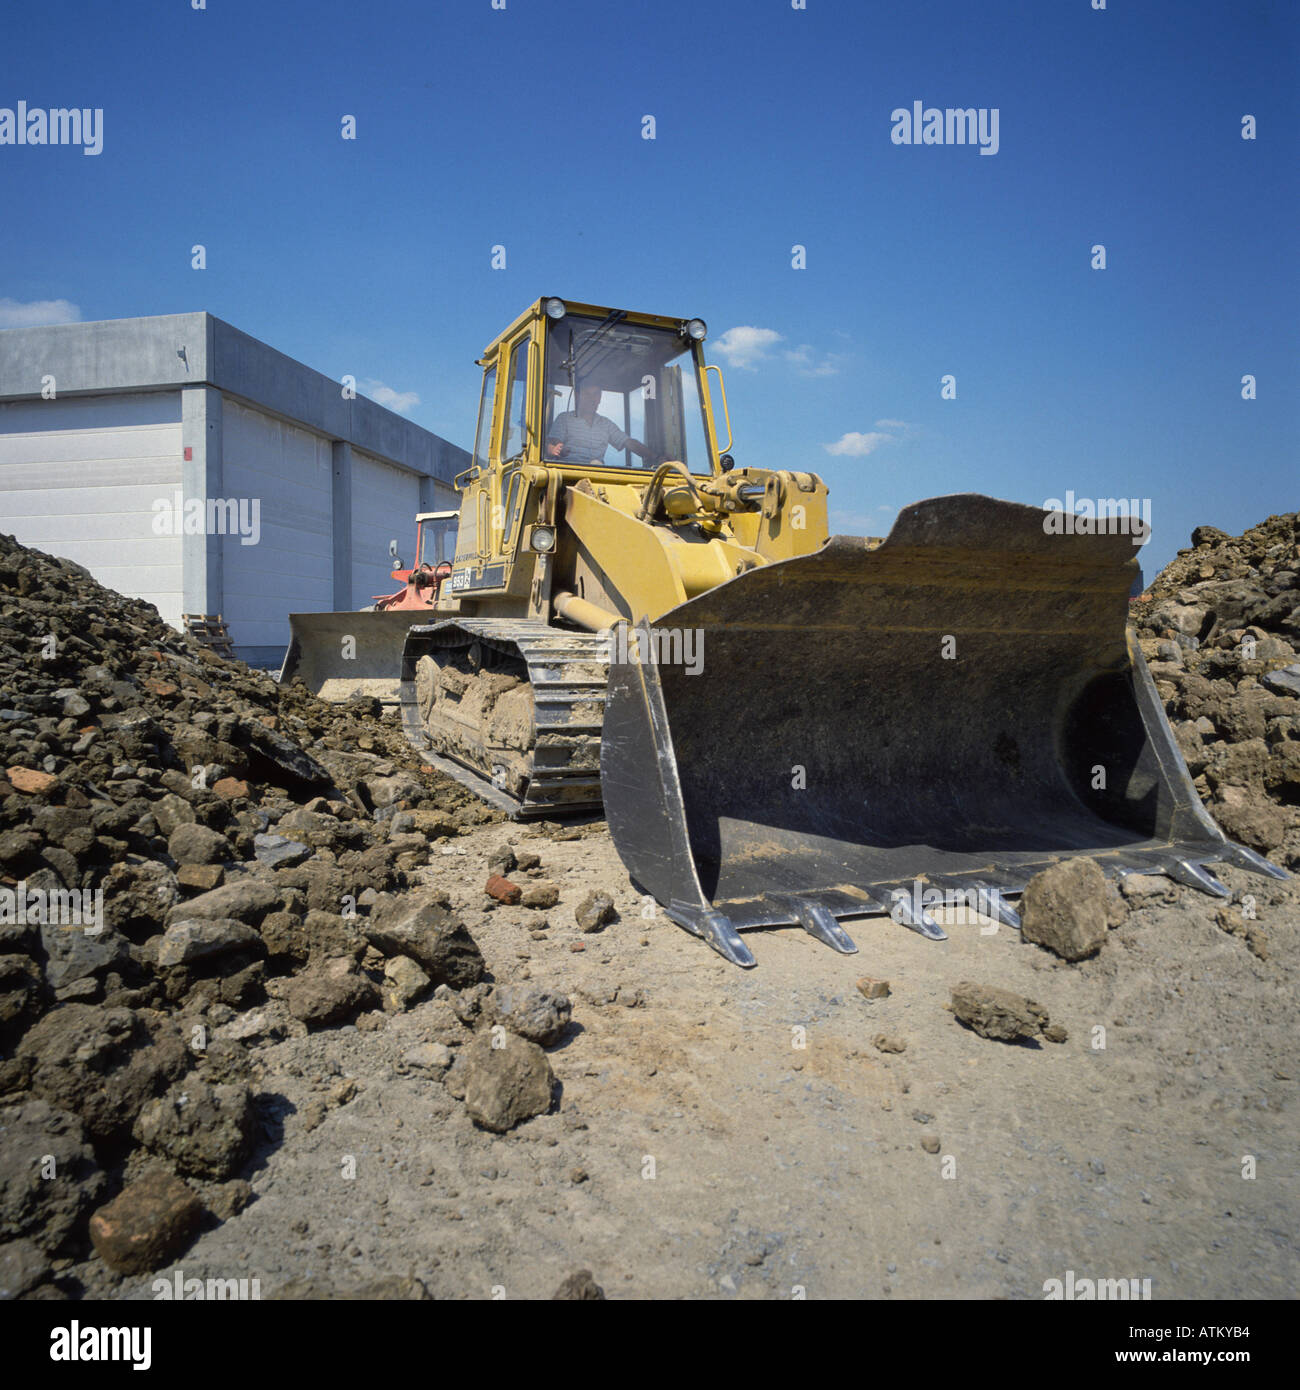 Construction vehicle Stock Photo